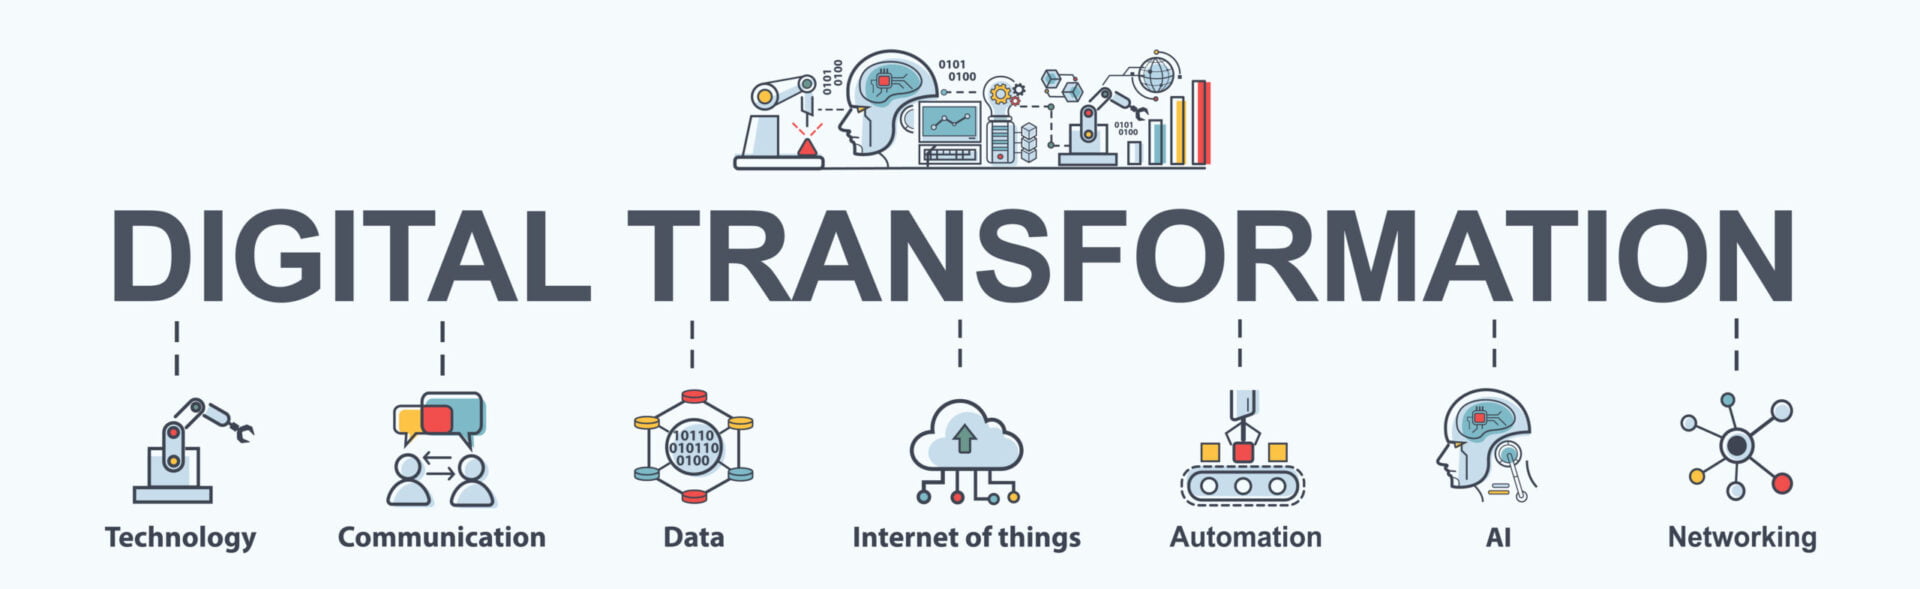 Technologies involved in digital transformation process